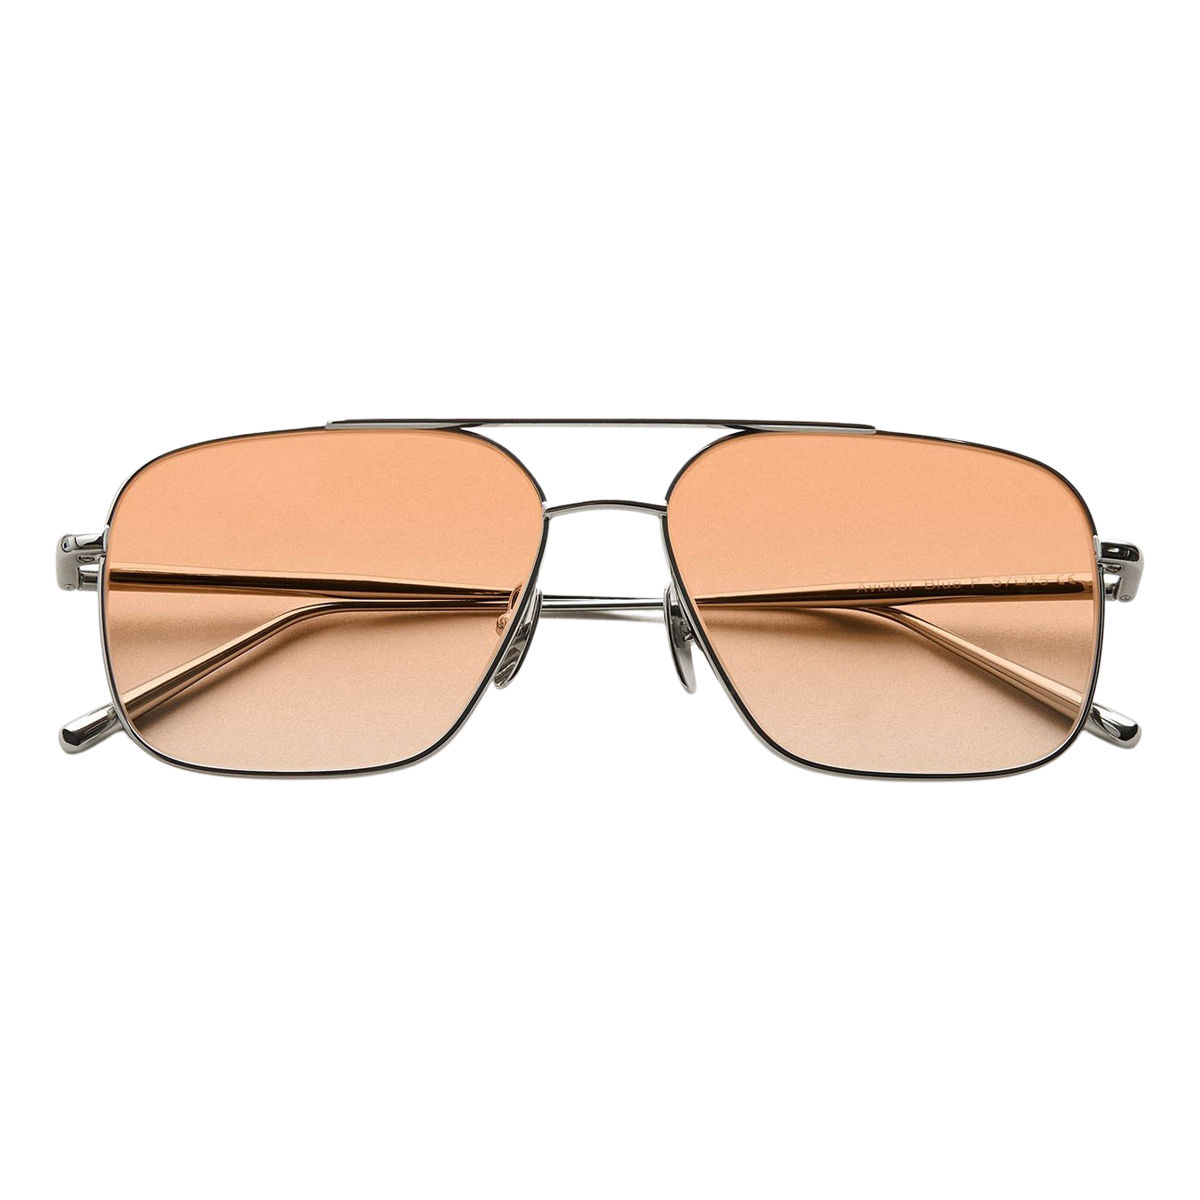 Chimi Eyewear Steel Aviator Orange Lenses Sunglasses 56mm Baltzar 